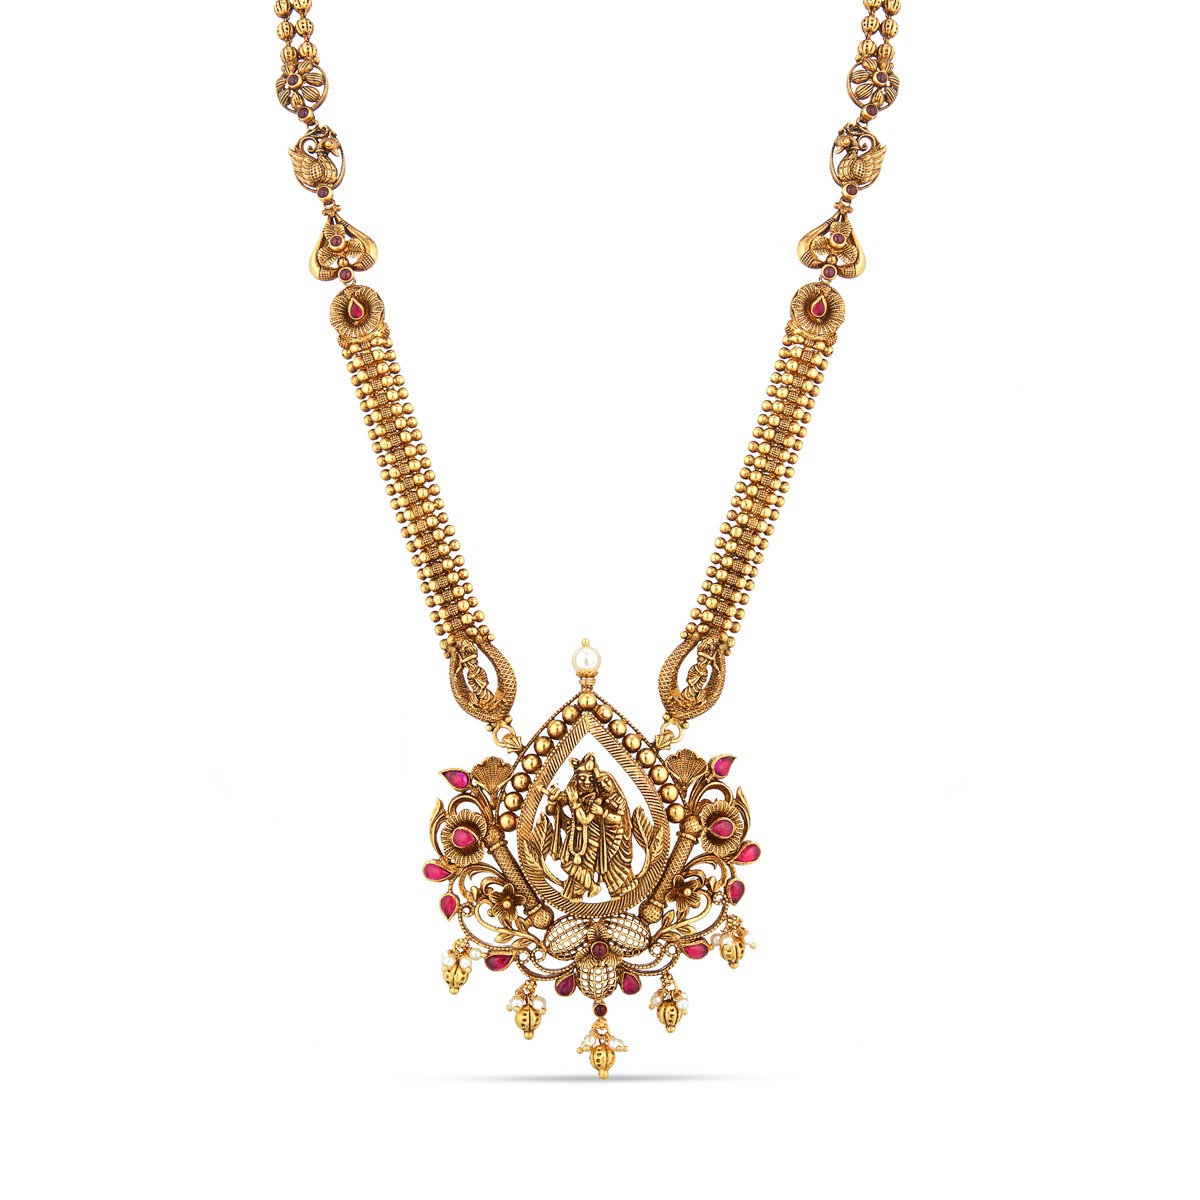 Vishtashrava Long Necklace - Long Necklaces - Gold